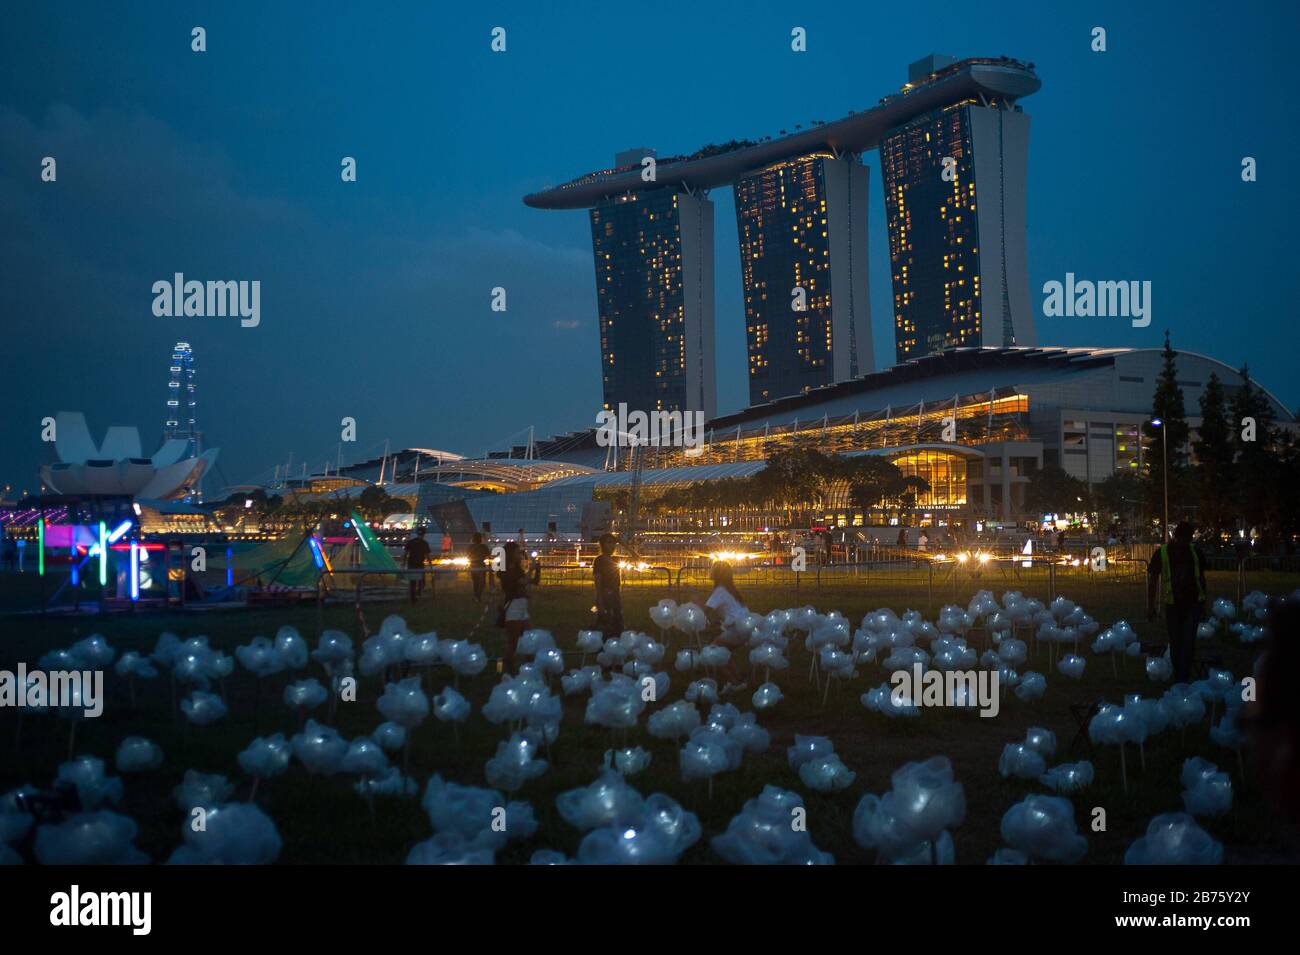 File:Marina Bay Sands and illuminated polyhedral building Louis